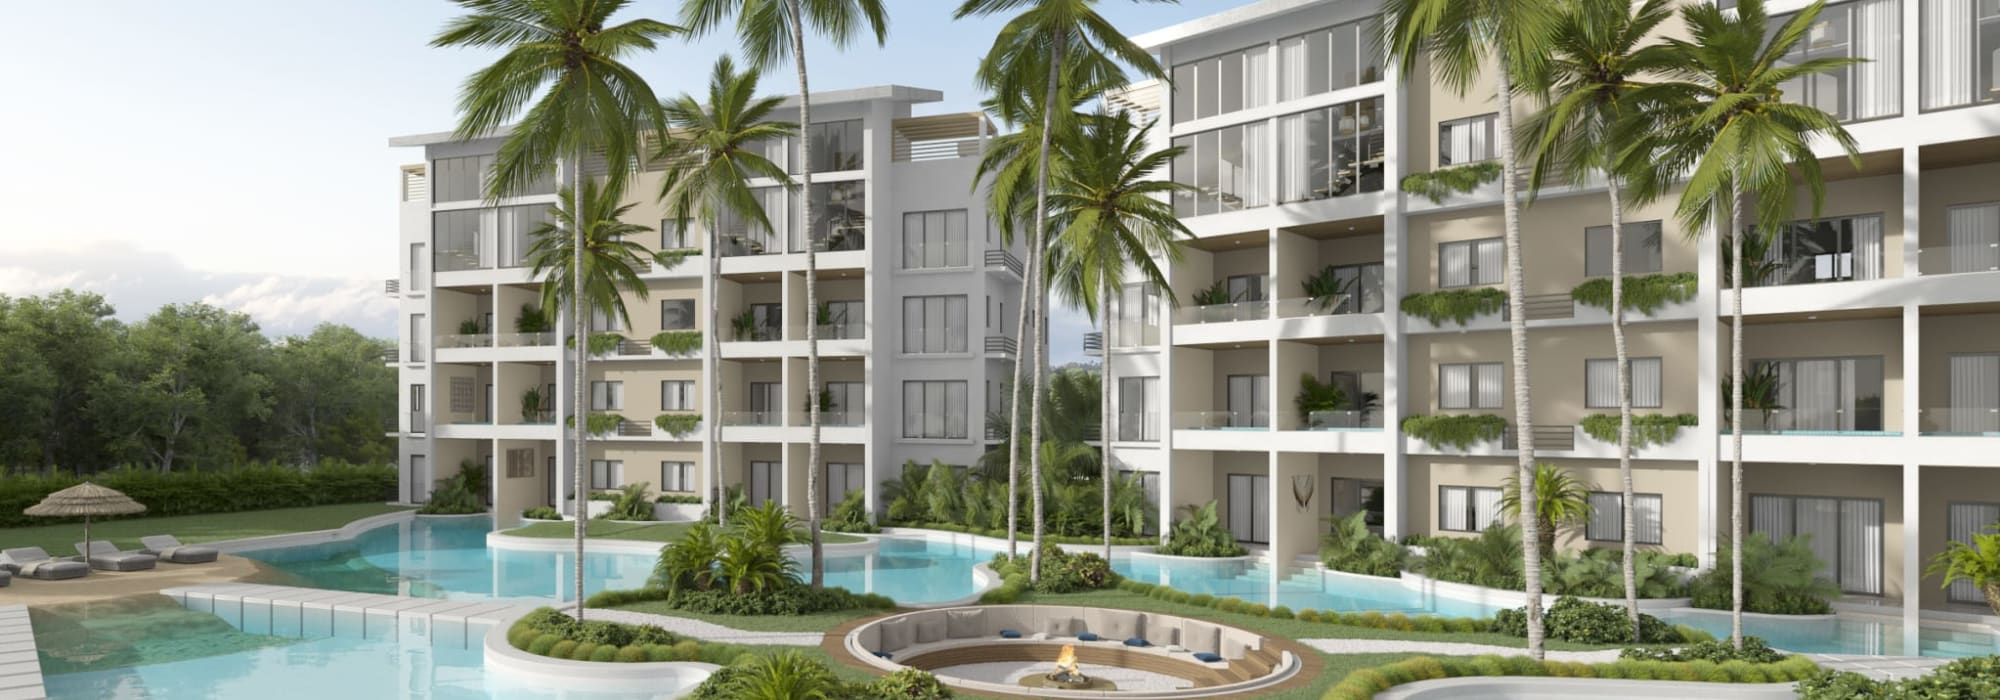 Proyecto de Hermosos Apartamentos en Bávaro, Punta Cana